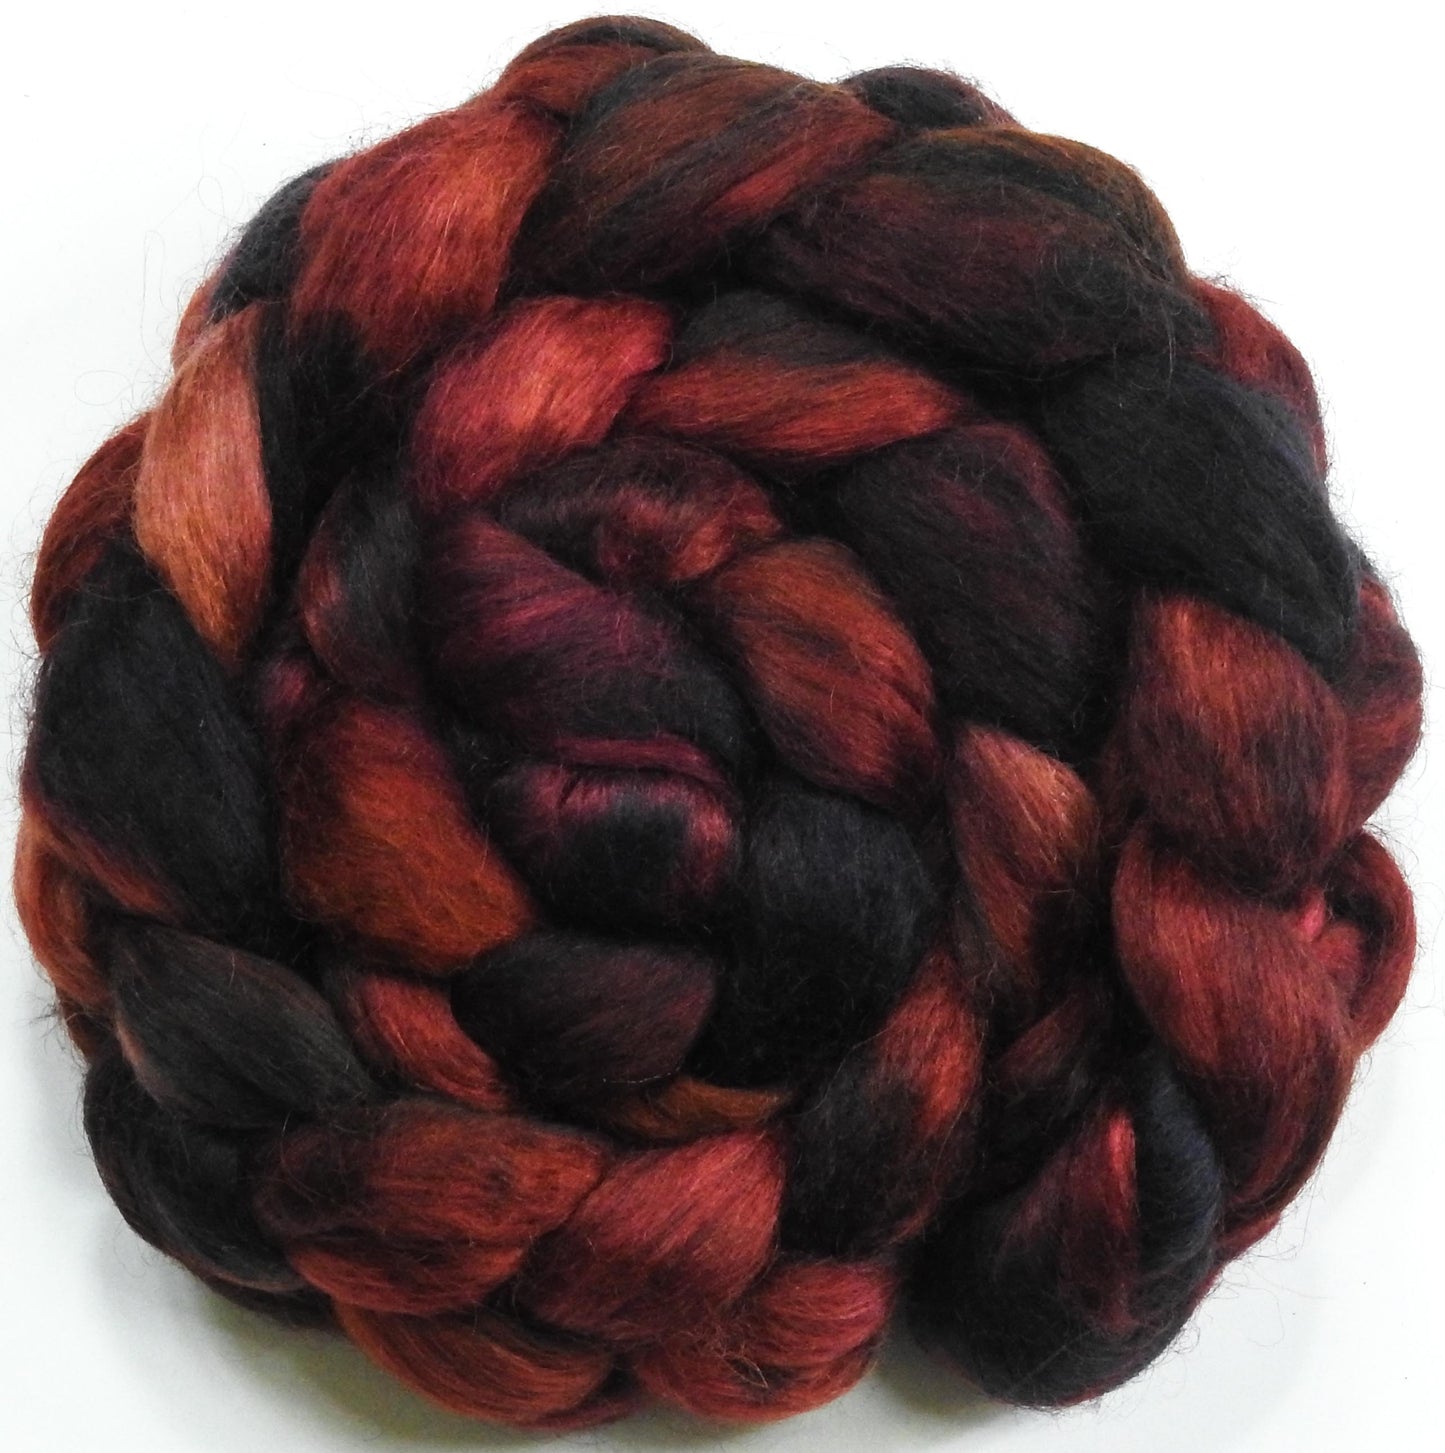 Jasper - Fusion Series - Batt in a Braid #52- Wensleydale/ Mulberry silk/ Polwarth (60/25/15)